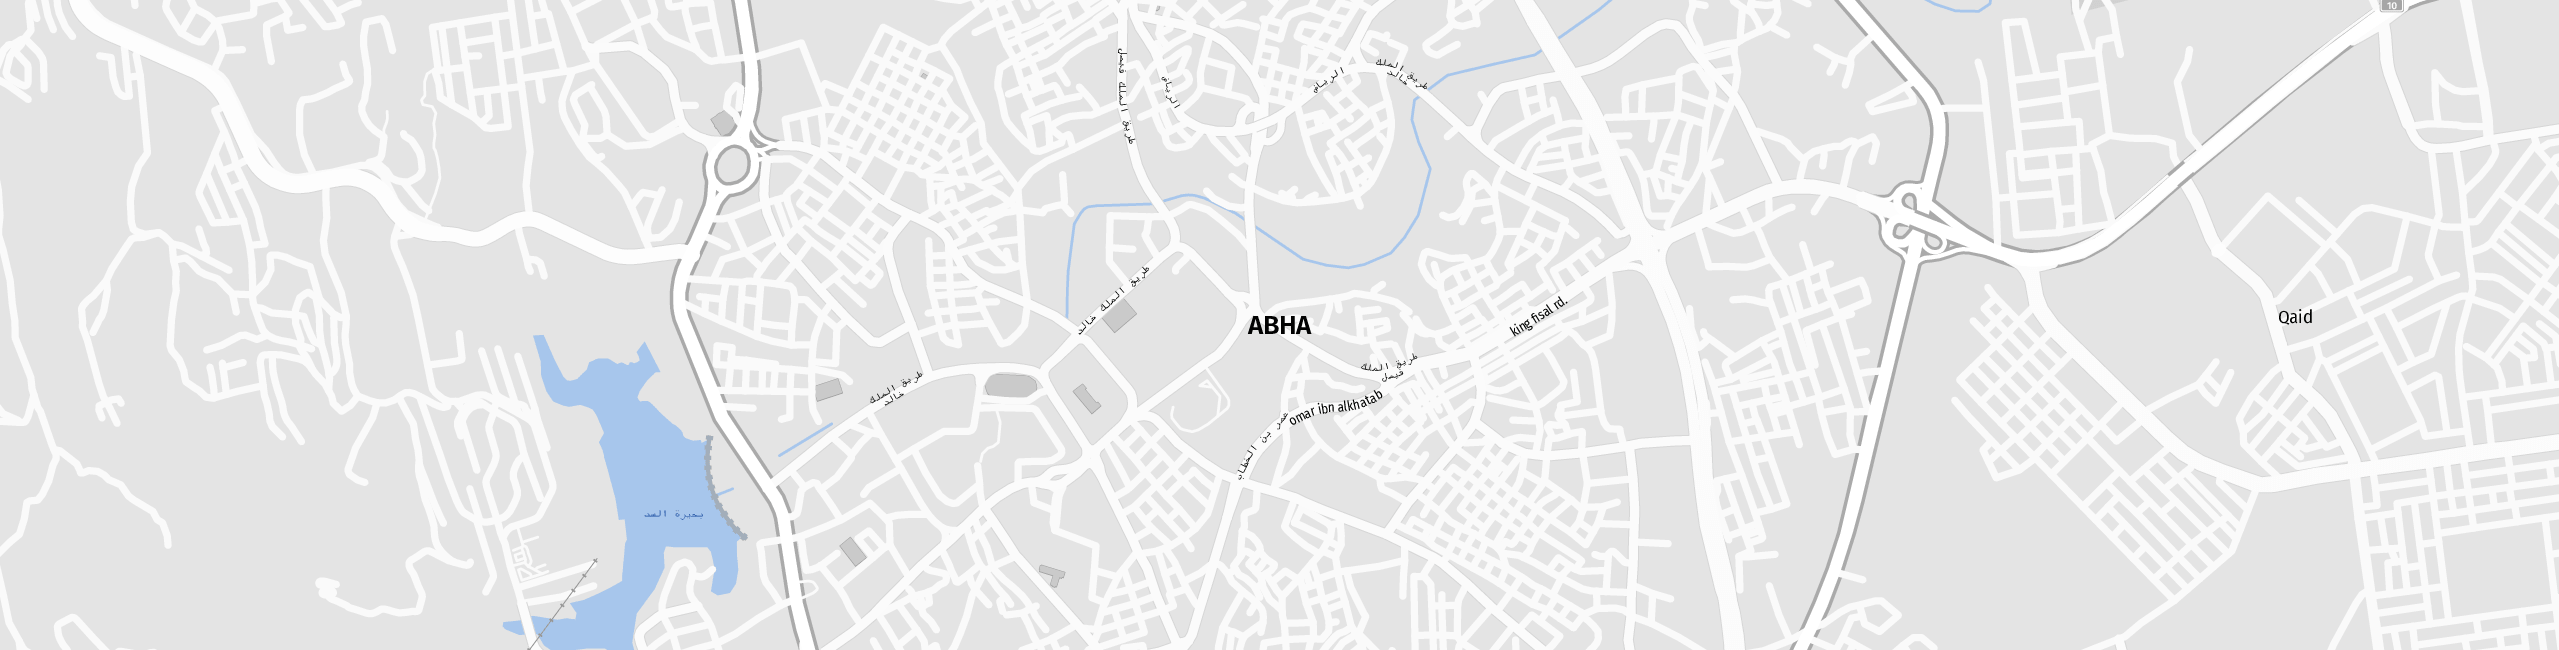 Stadtplan Abha zum Downloaden.